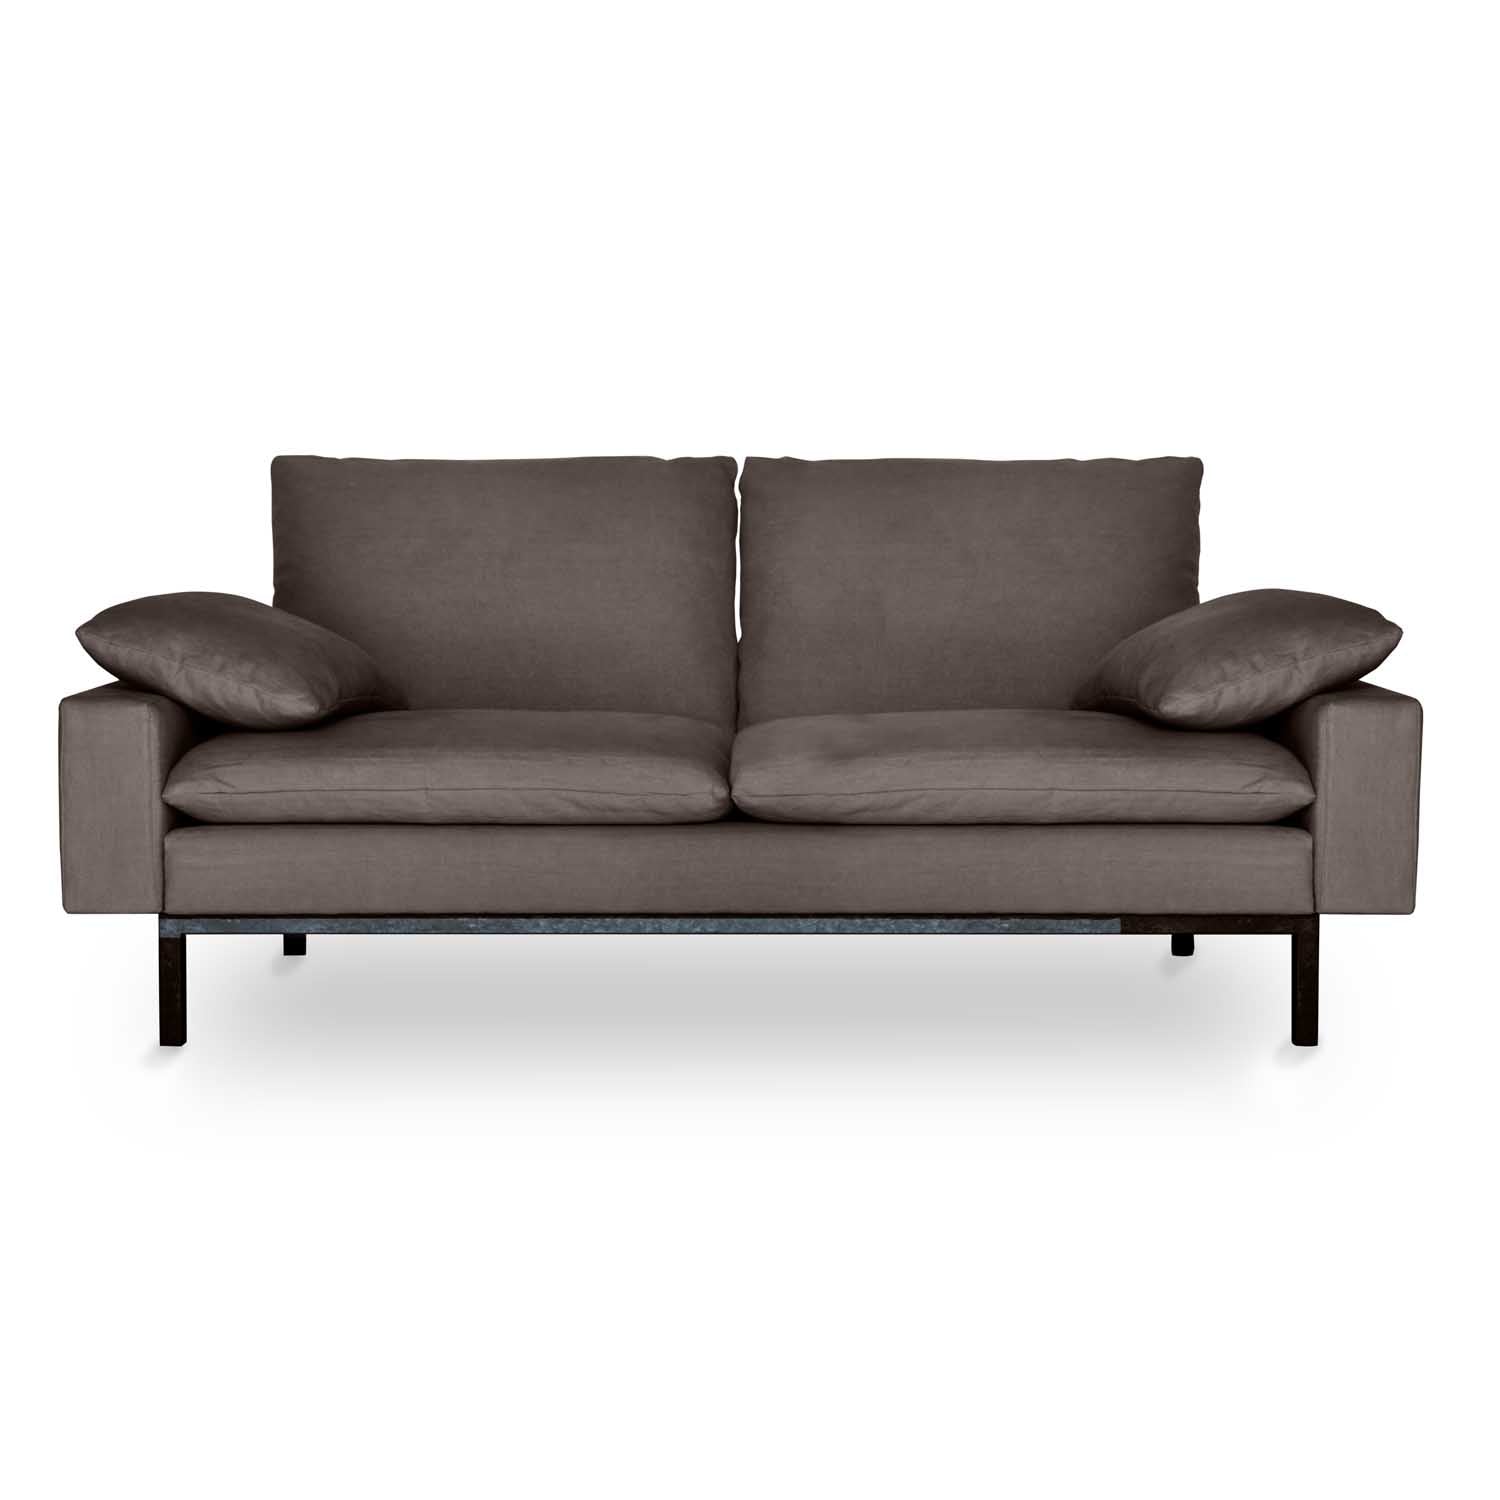 Elegant Living Room Furniture, warm grey linen sofa